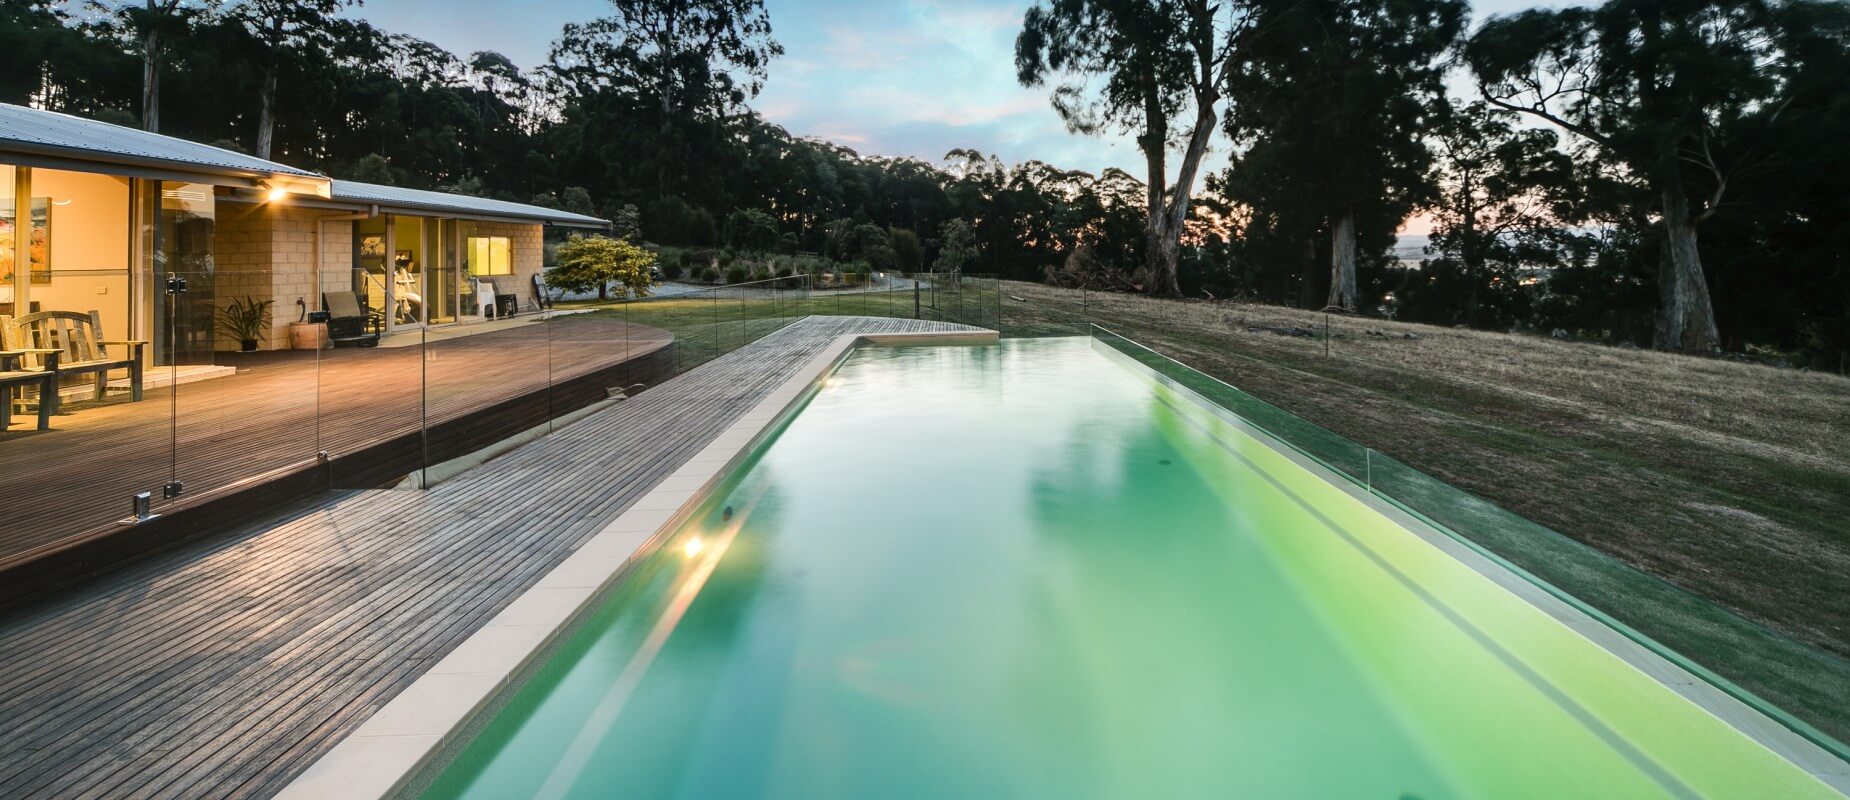 Compass-Pools-Australia_X-Trainer-11.8m-fibreglass-pool-with-Maxi-Glass-Edge-in-Trafalgar-in-Beach-colour